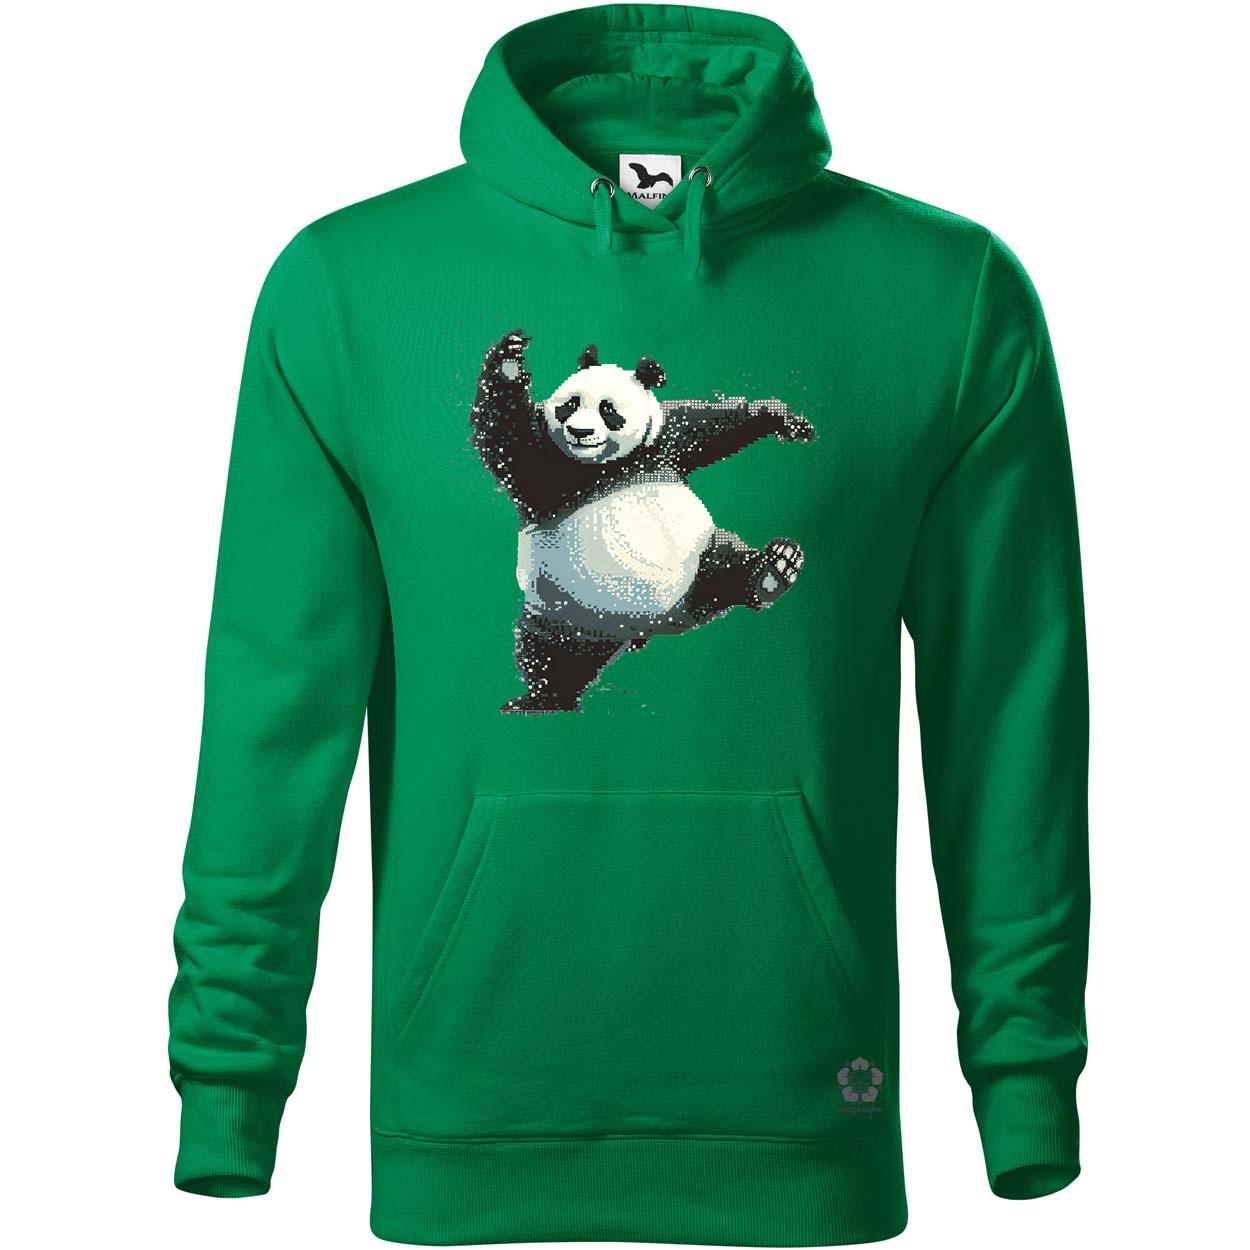 Pixelart kung fu panda v4